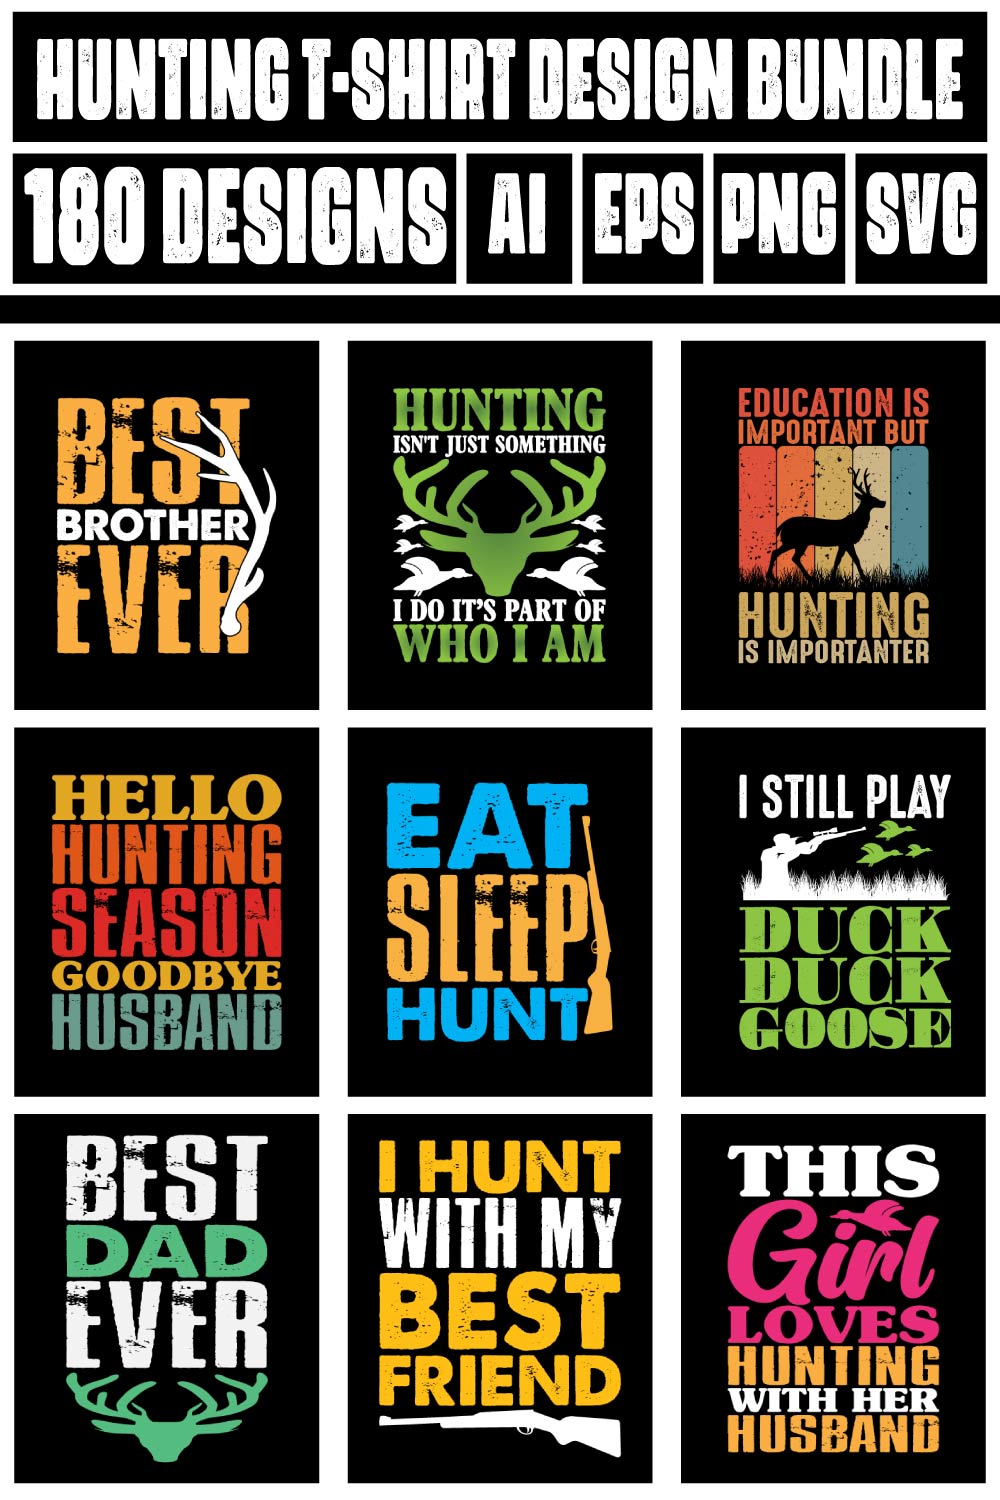 Hunting T-shirt Design Bundle 2 pinterest preview image.